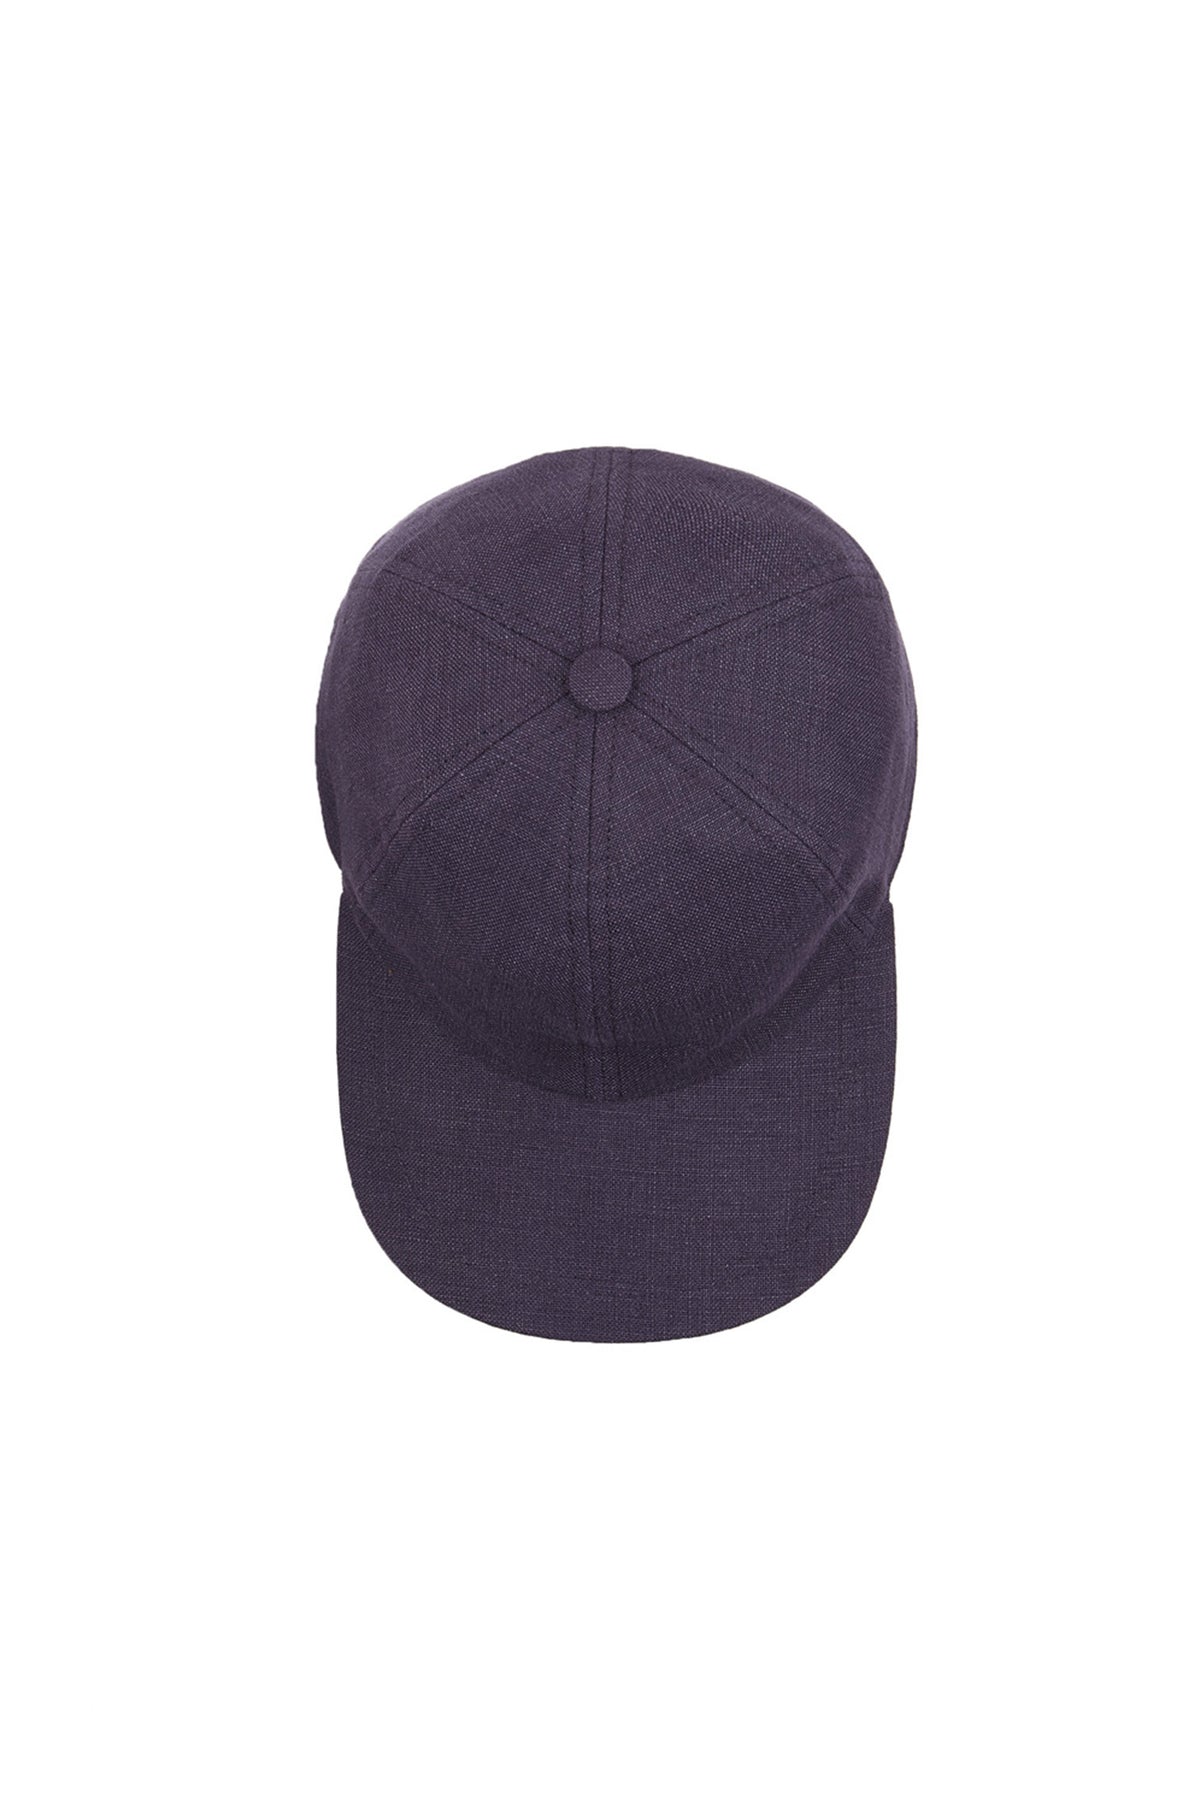 Rimini Baseball Cap - Lock Men & for & Women Co. Hats